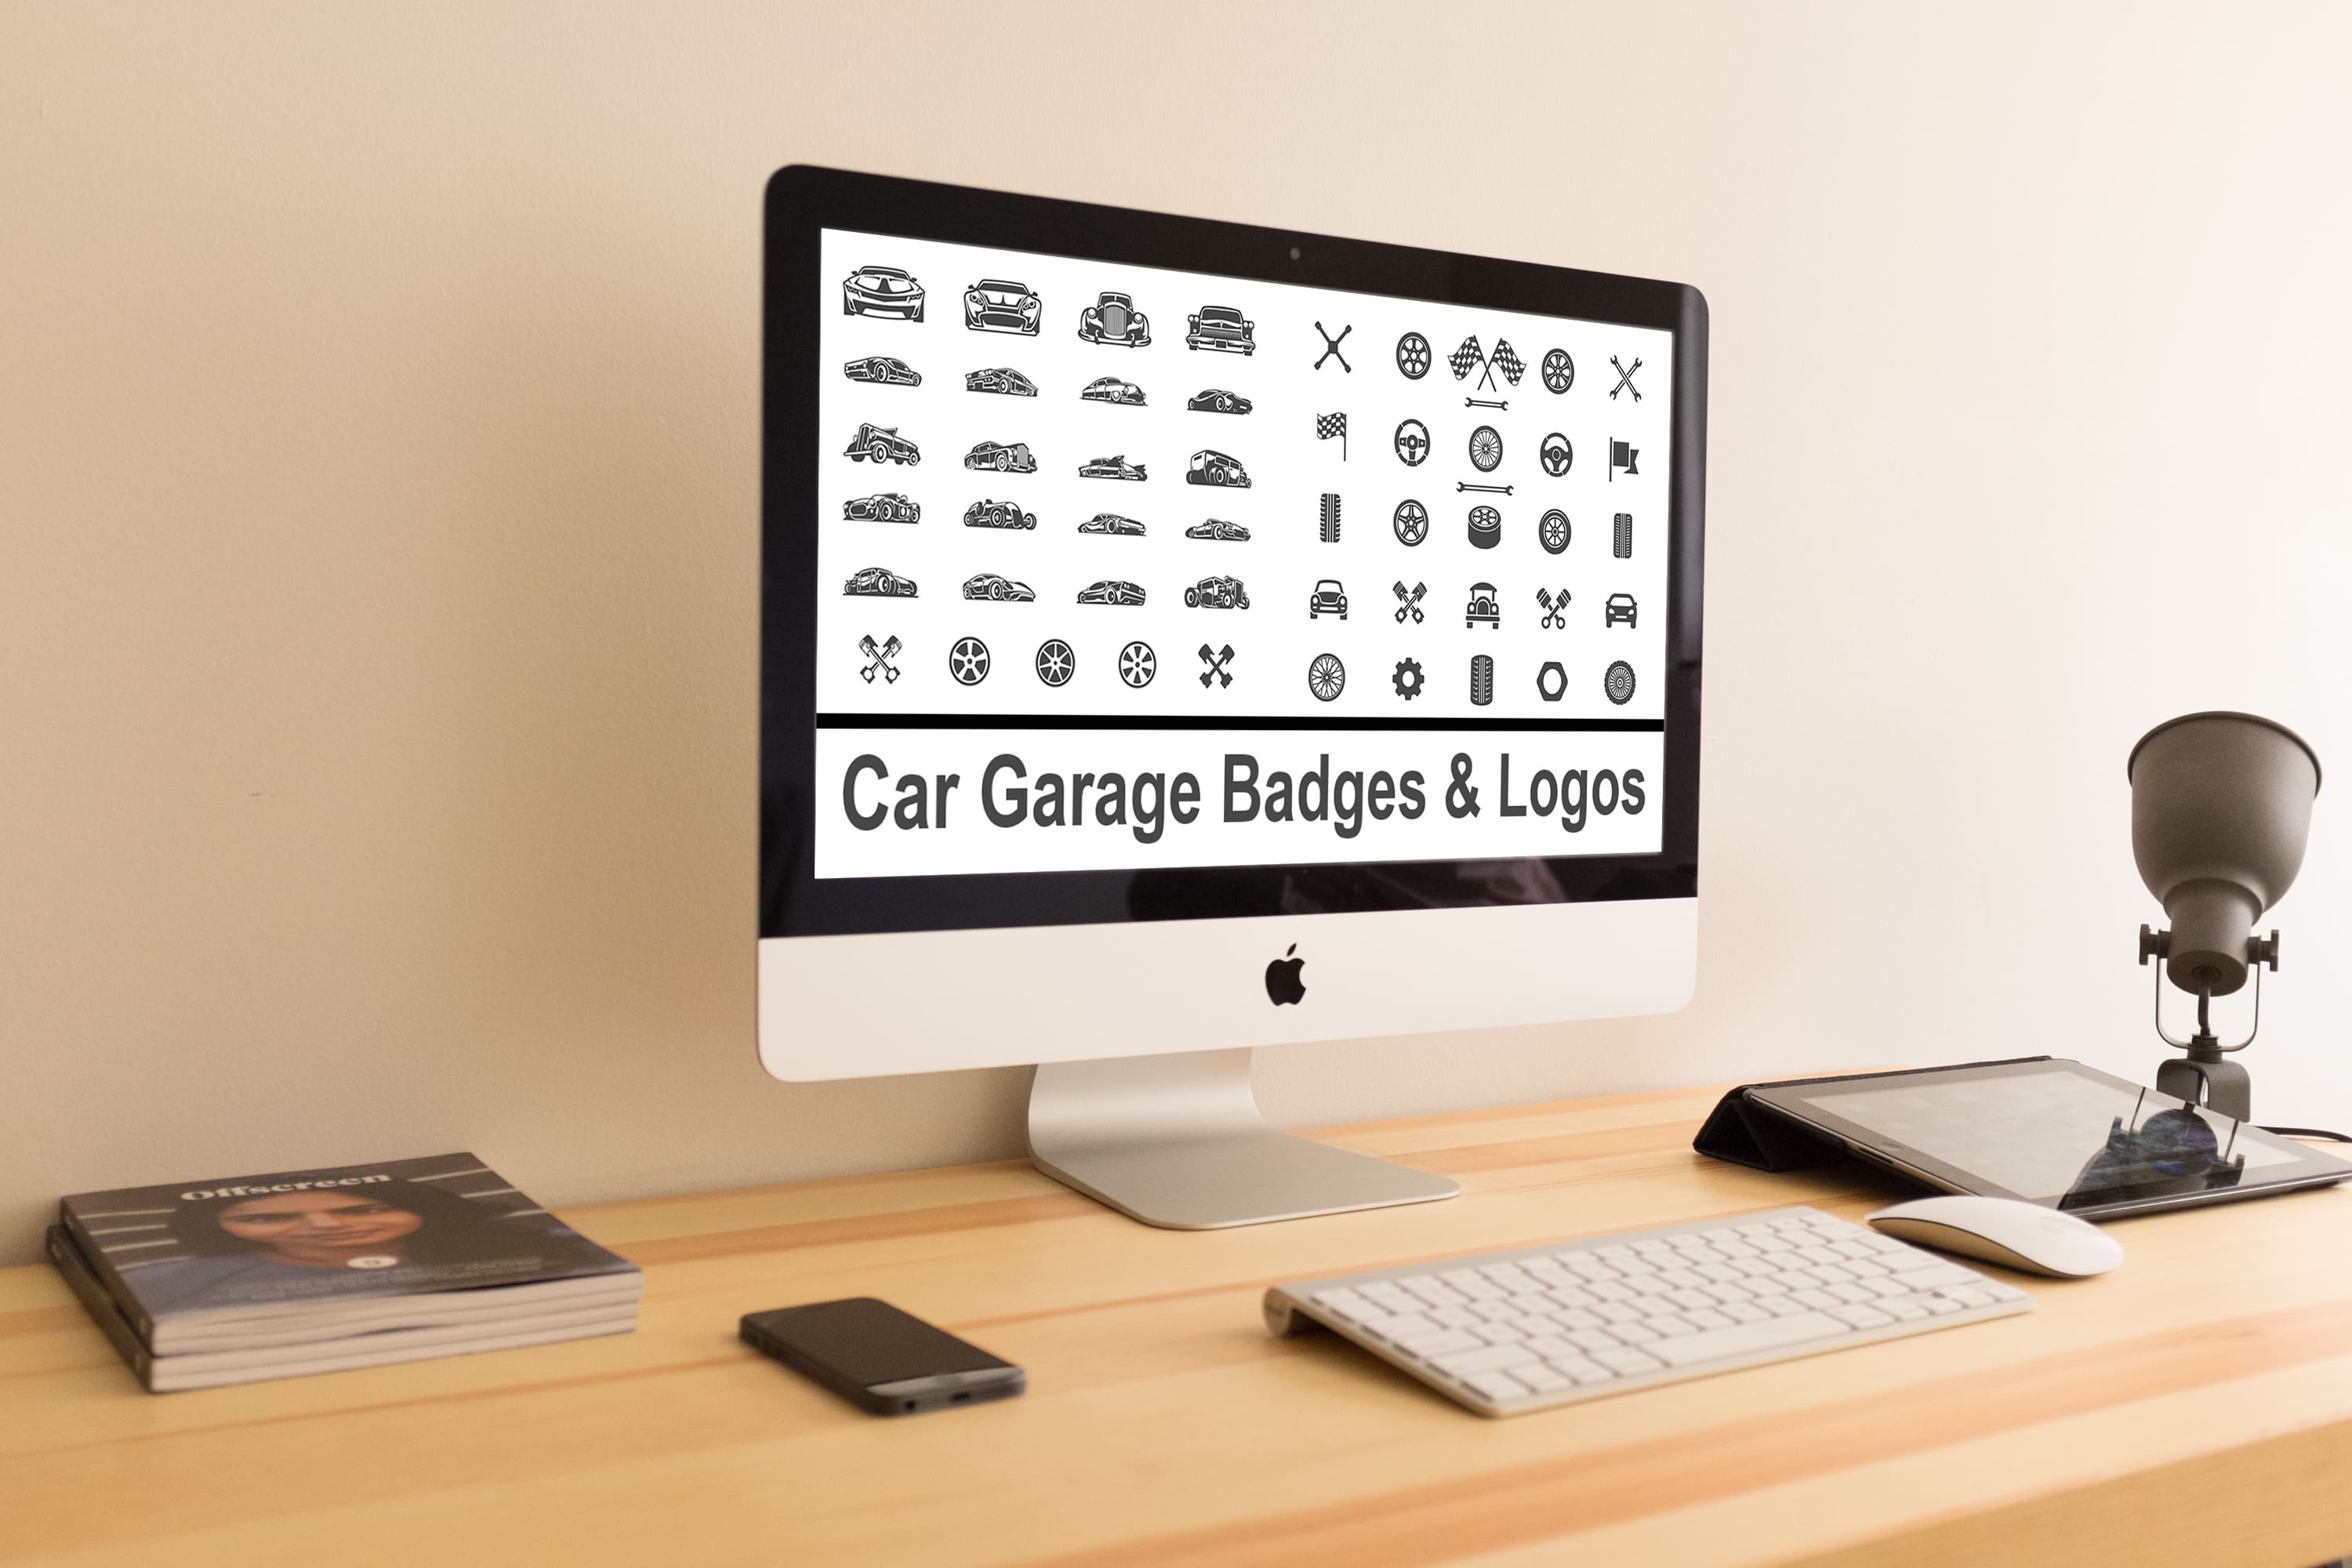 Desktop option of the Car Garage Badges & Logos.